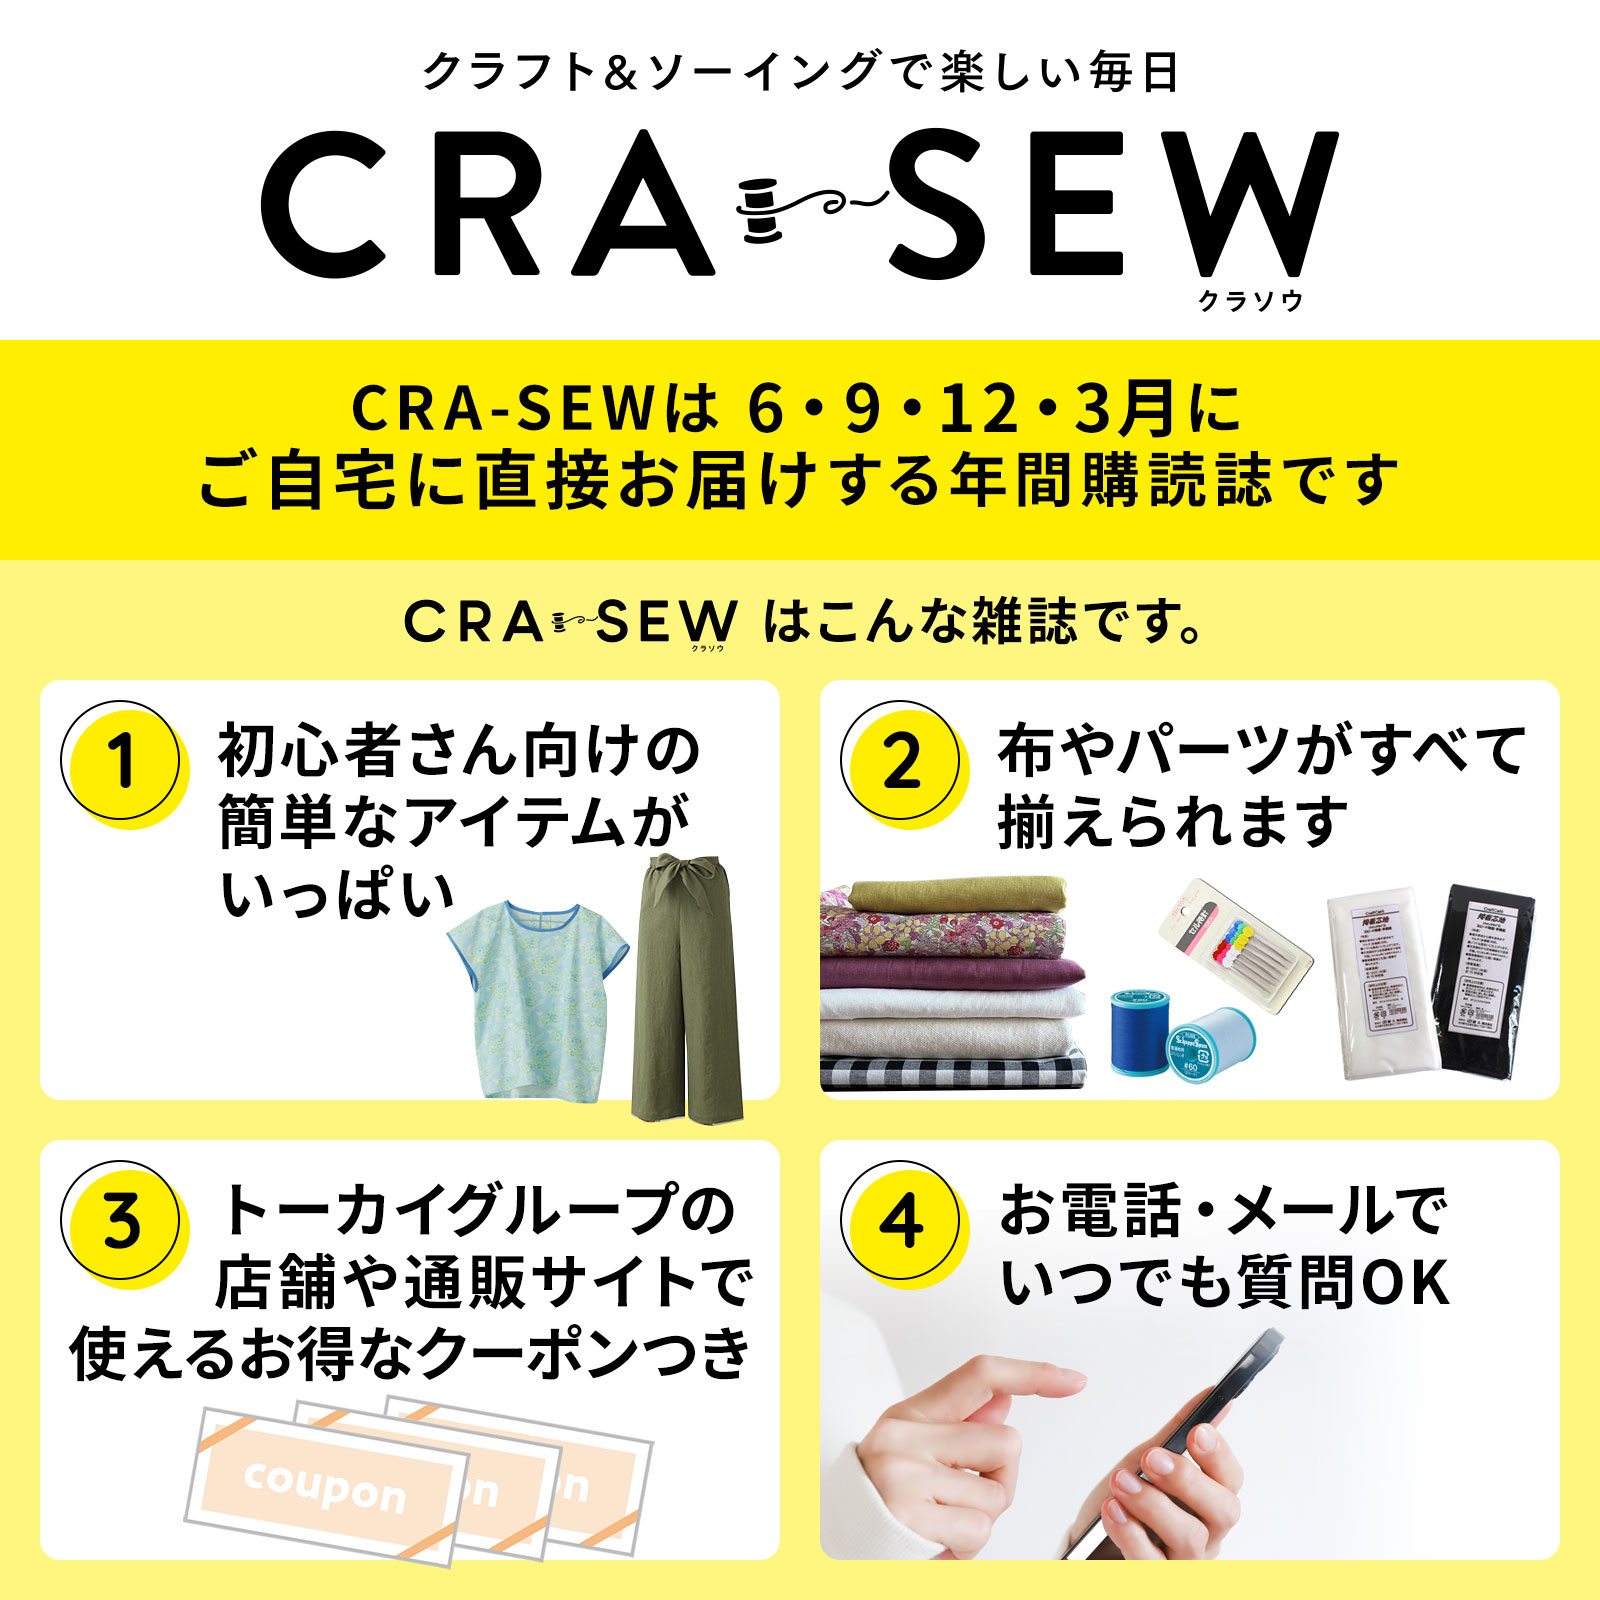 CRA-SEW（クラソウ） Vol.3-6（12/7発売号～）【年間購読】